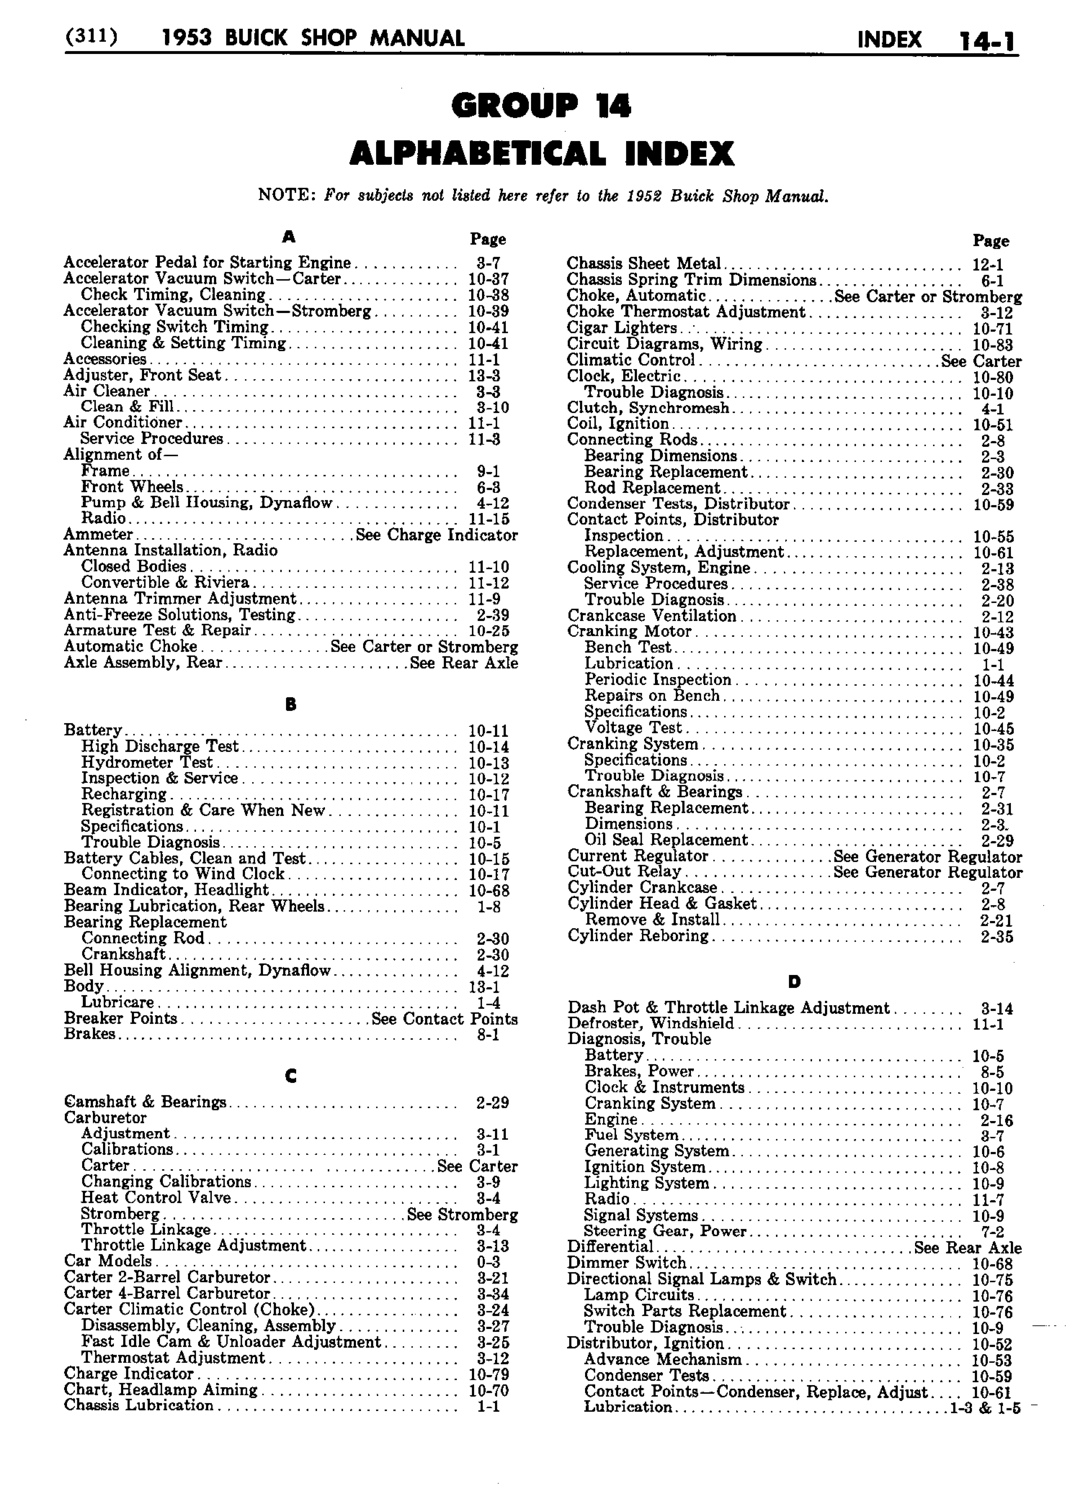 n_15 1953 Buick Shop Manual - Index-001-001.jpg